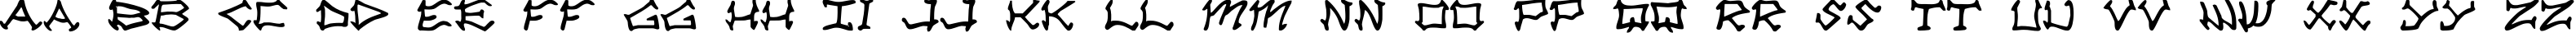 Пример написания английского алфавита шрифтом Rad Zad